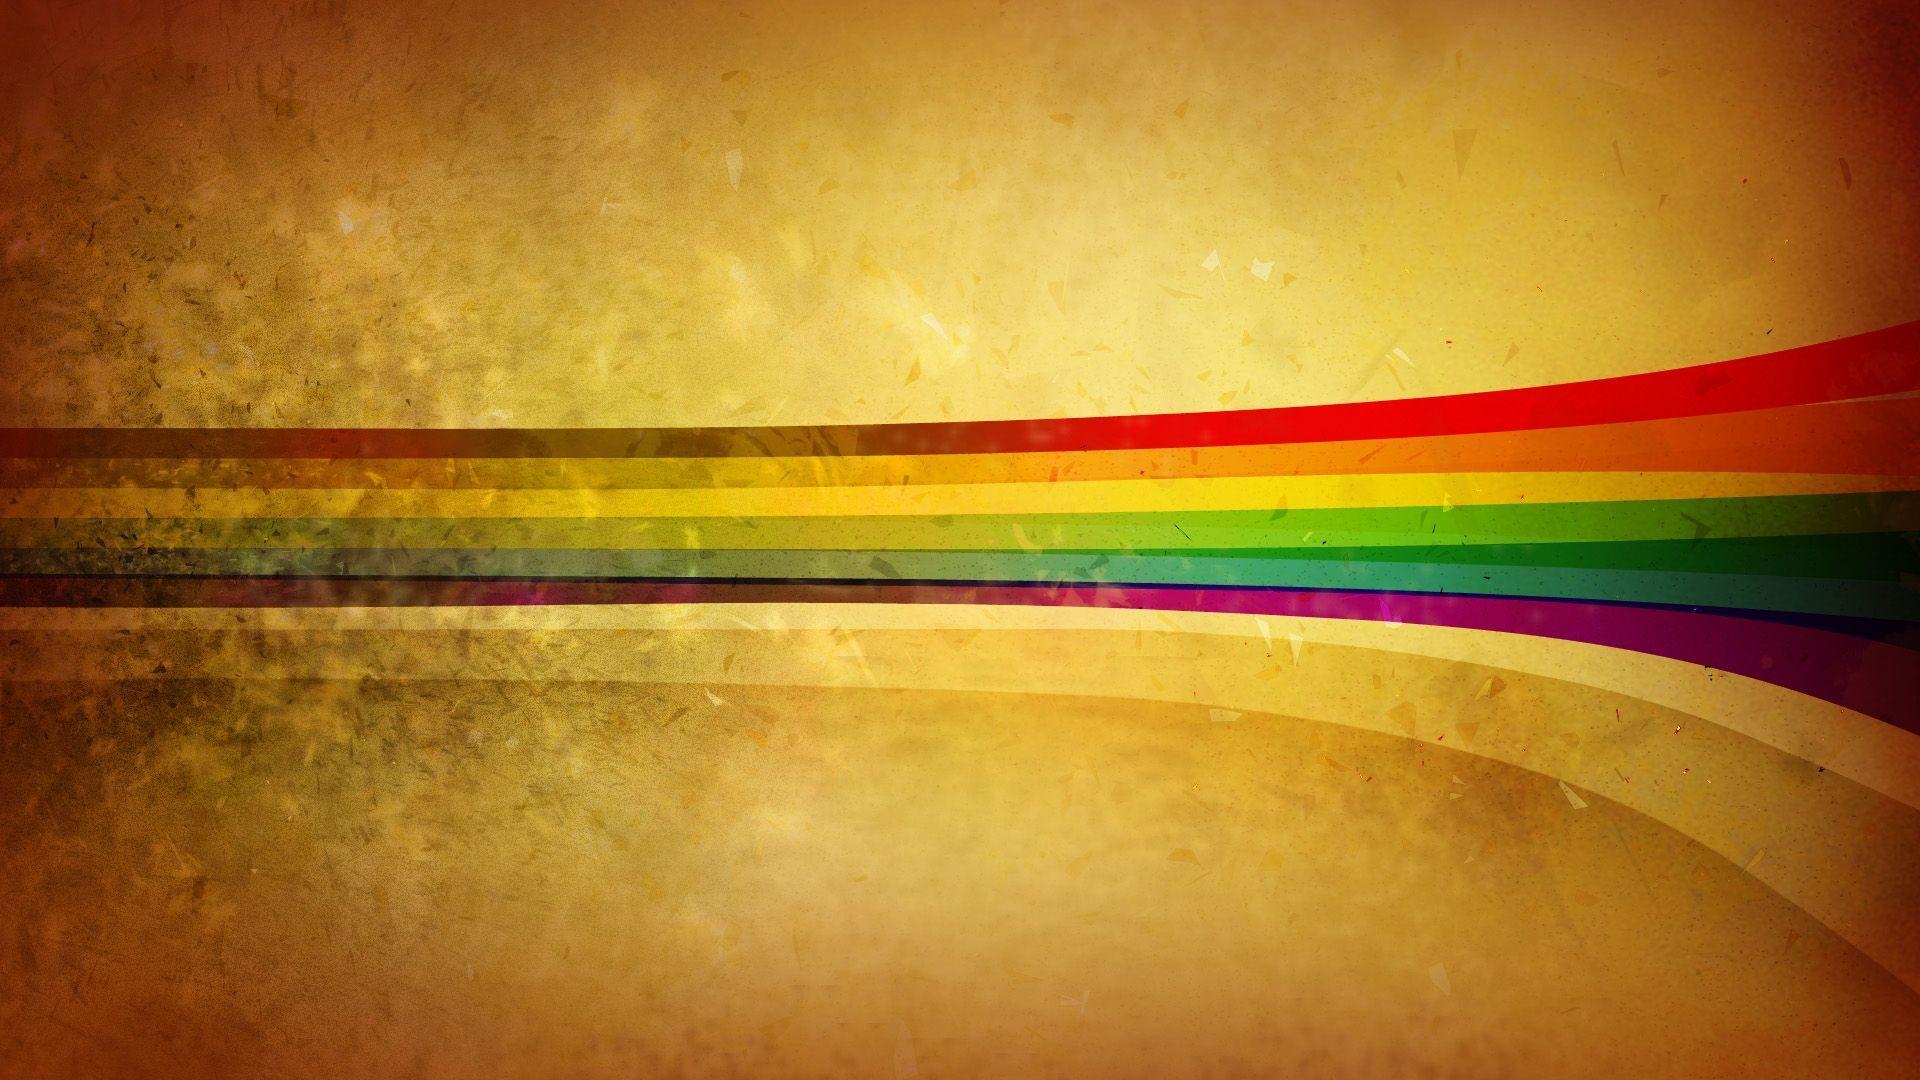 Retro Rainbow Wallpapers  Top Free Retro Rainbow Backgrounds   WallpaperAccess